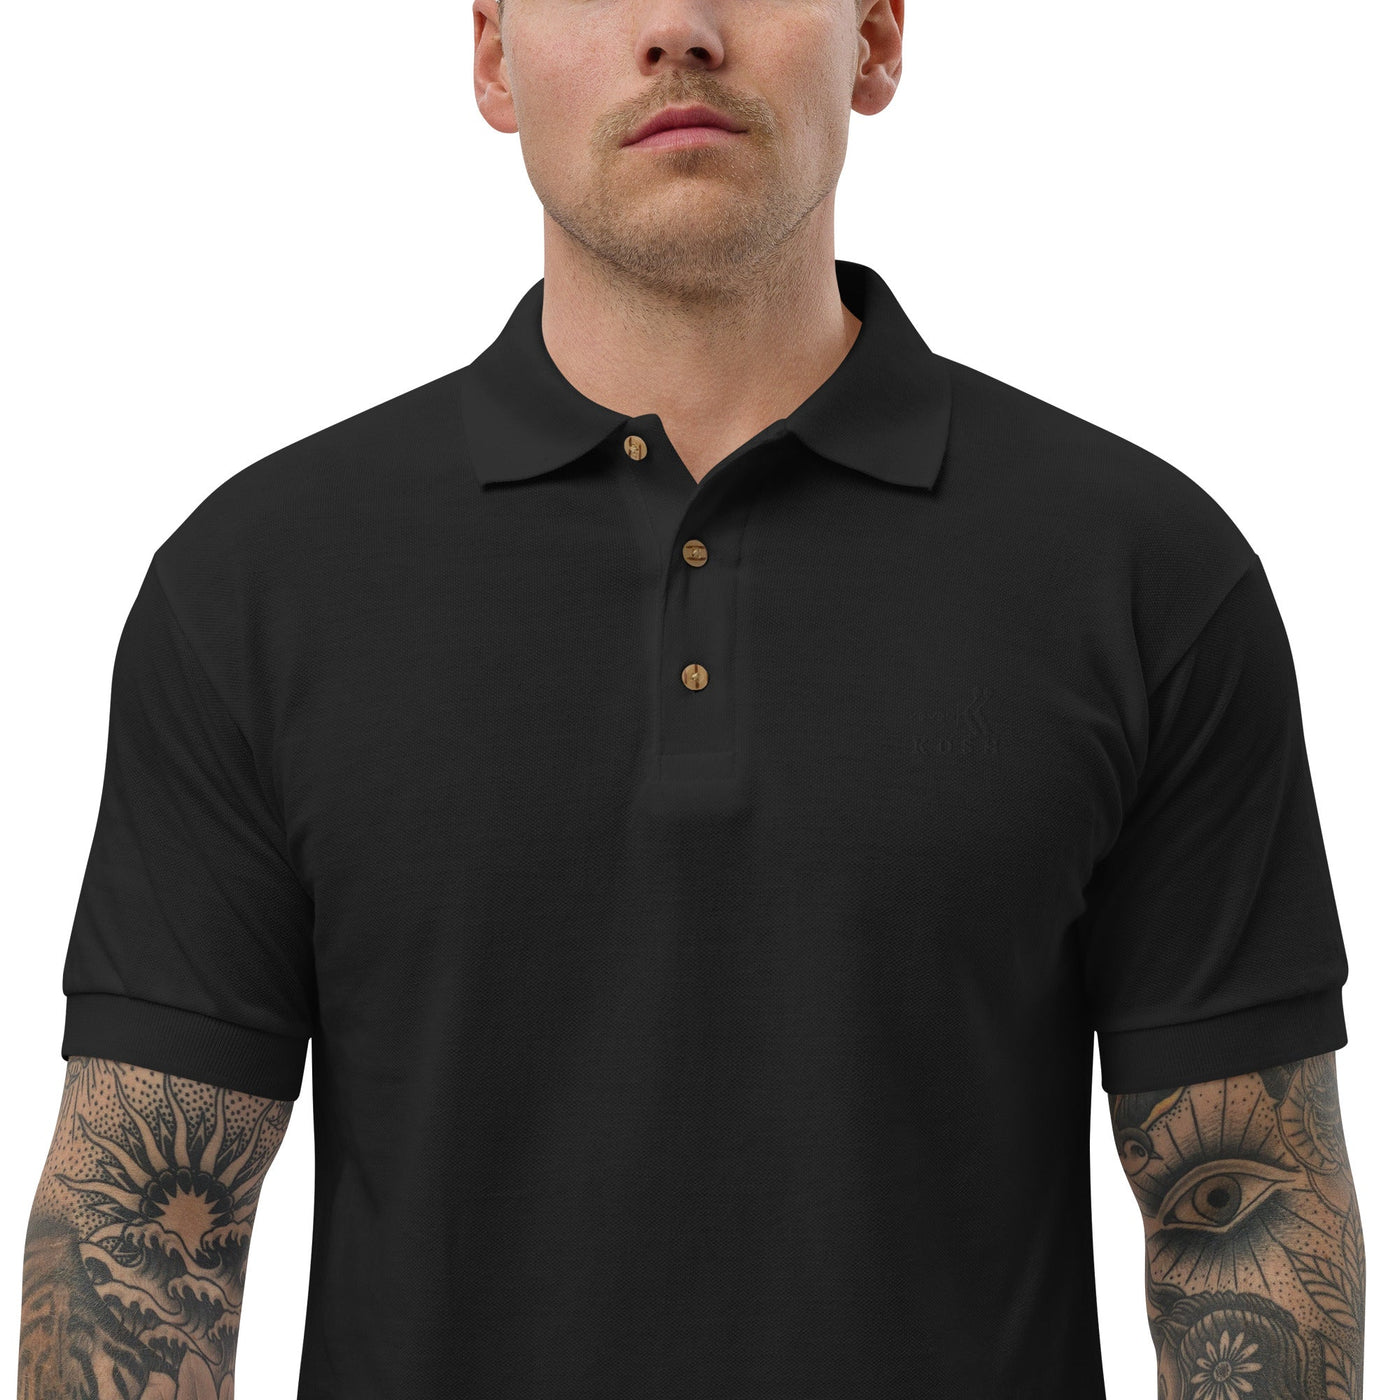 KevenKosh® Polo T-Shirt Men KevenKosh Black S 